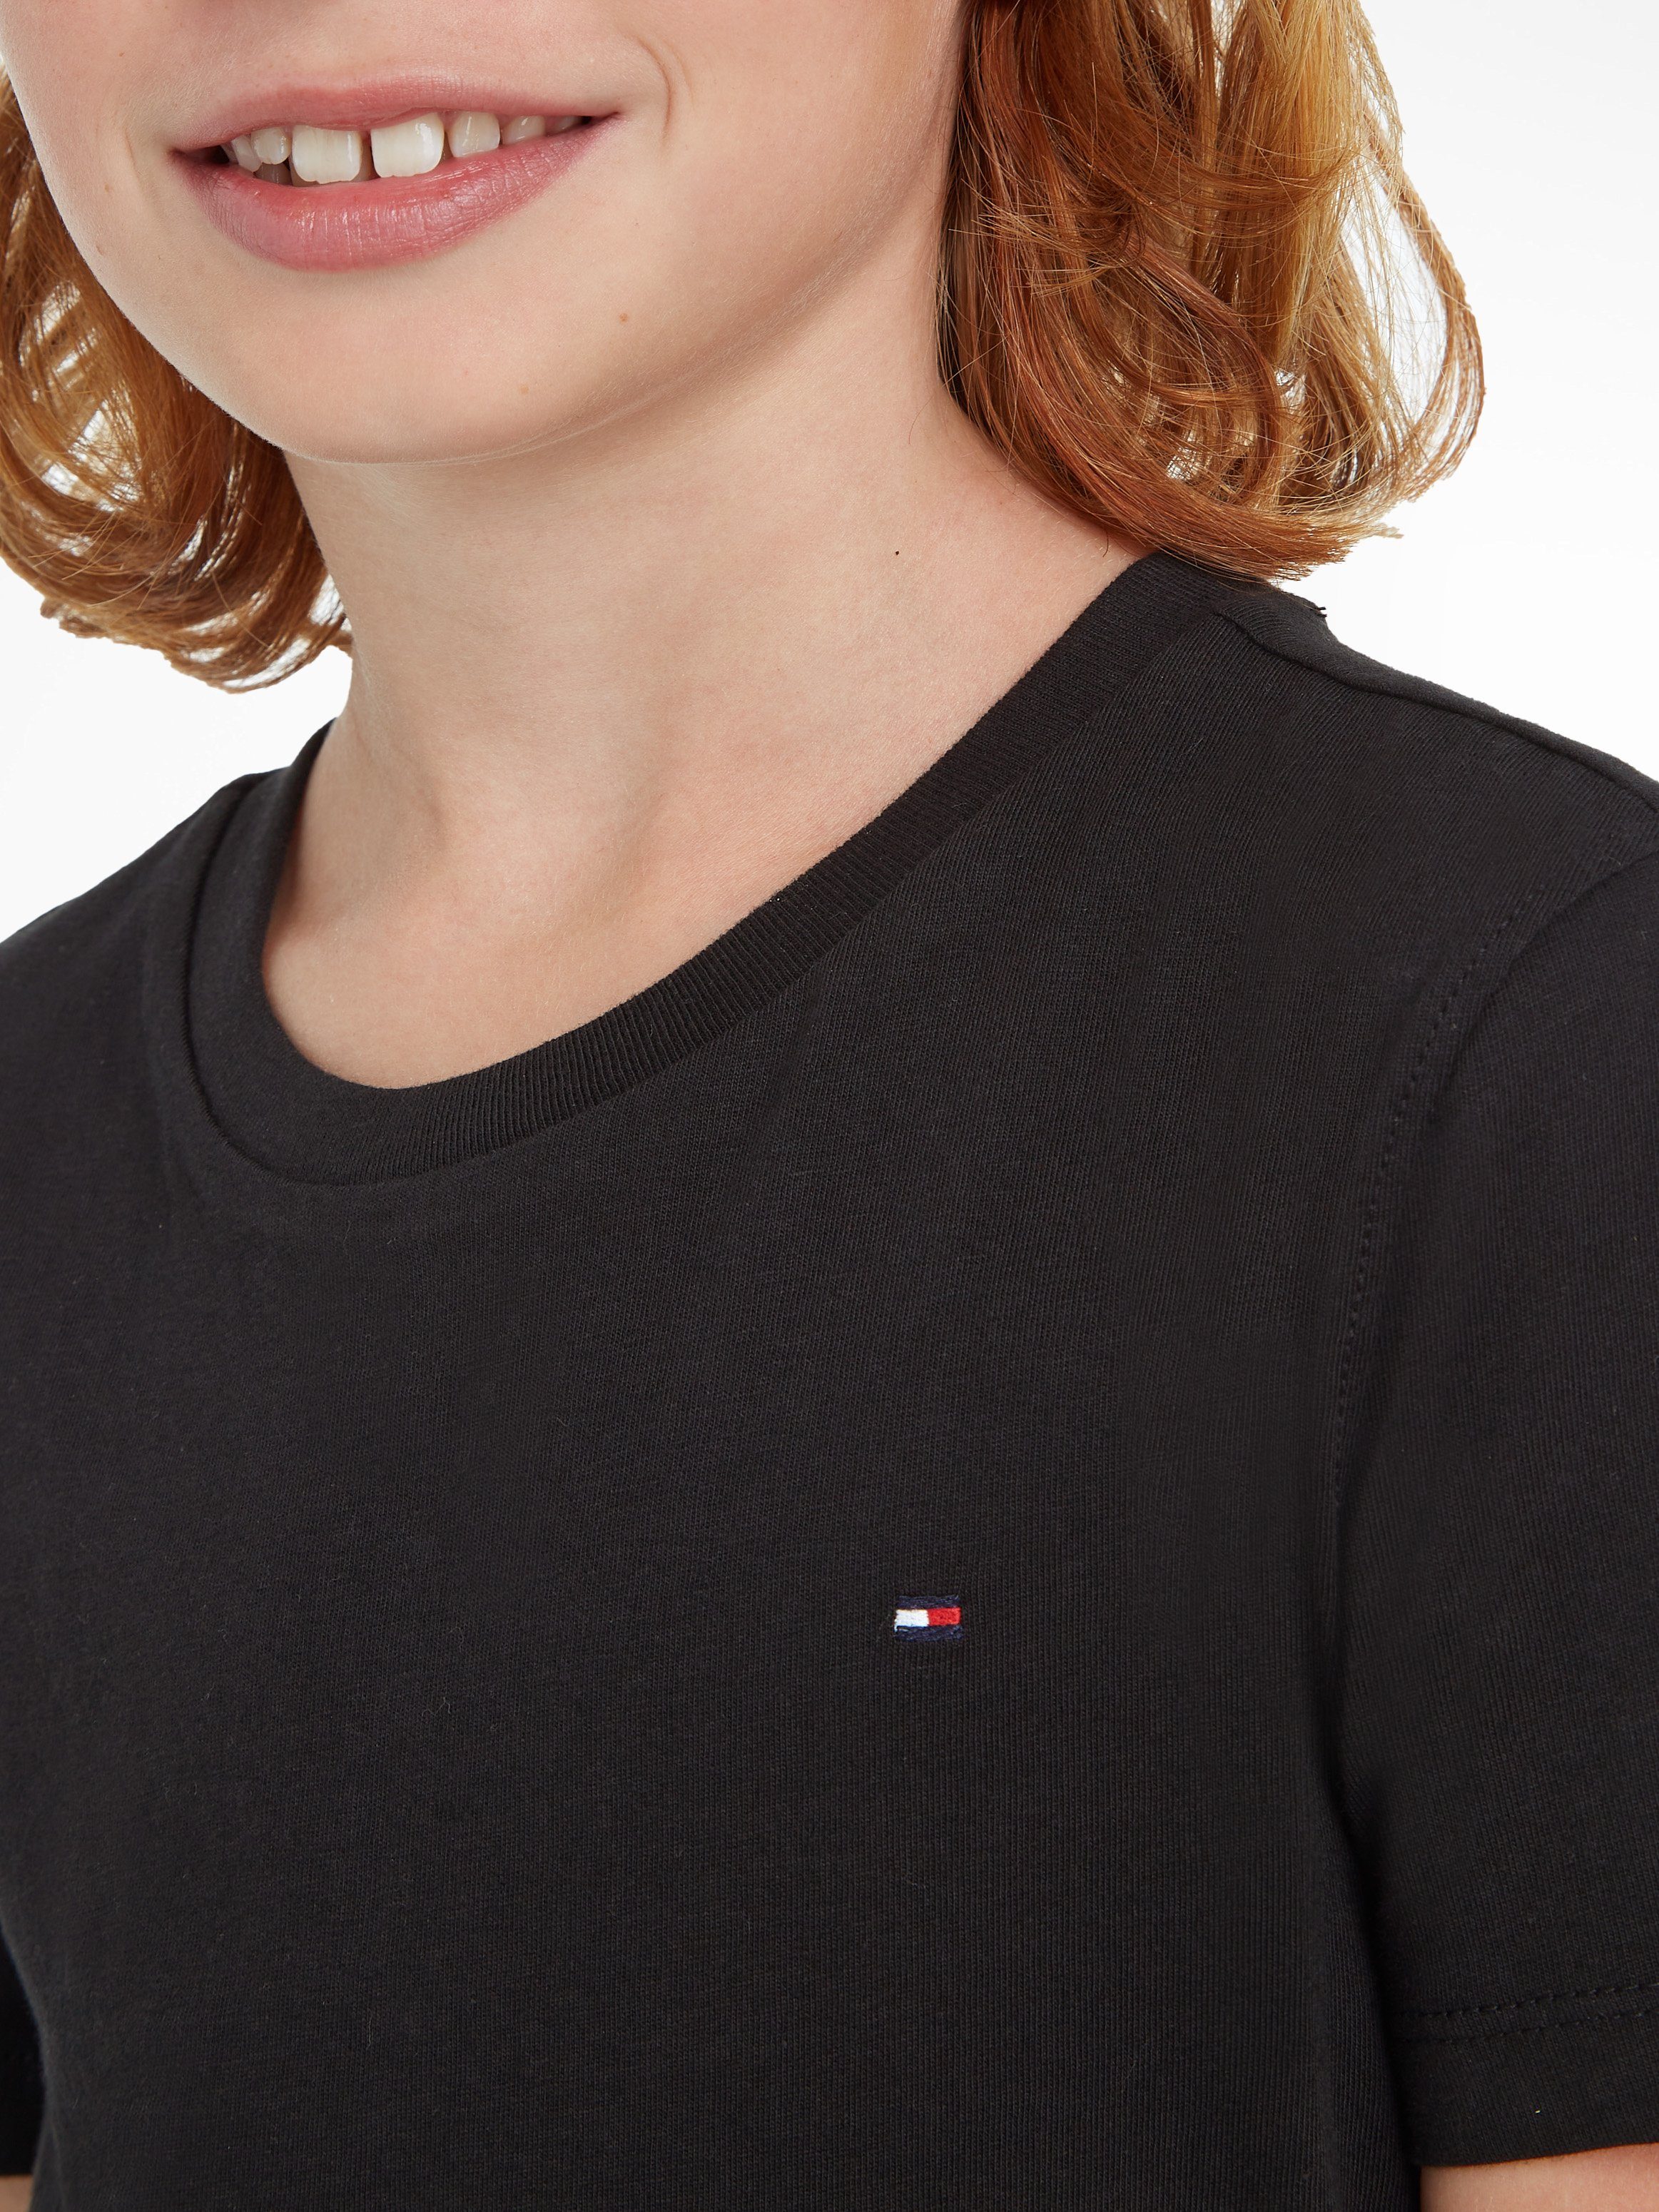 CN KNIT Tommy Jungen Junior BASIC Kinder BOYS Hilfiger Kids T-Shirt MiniMe,für